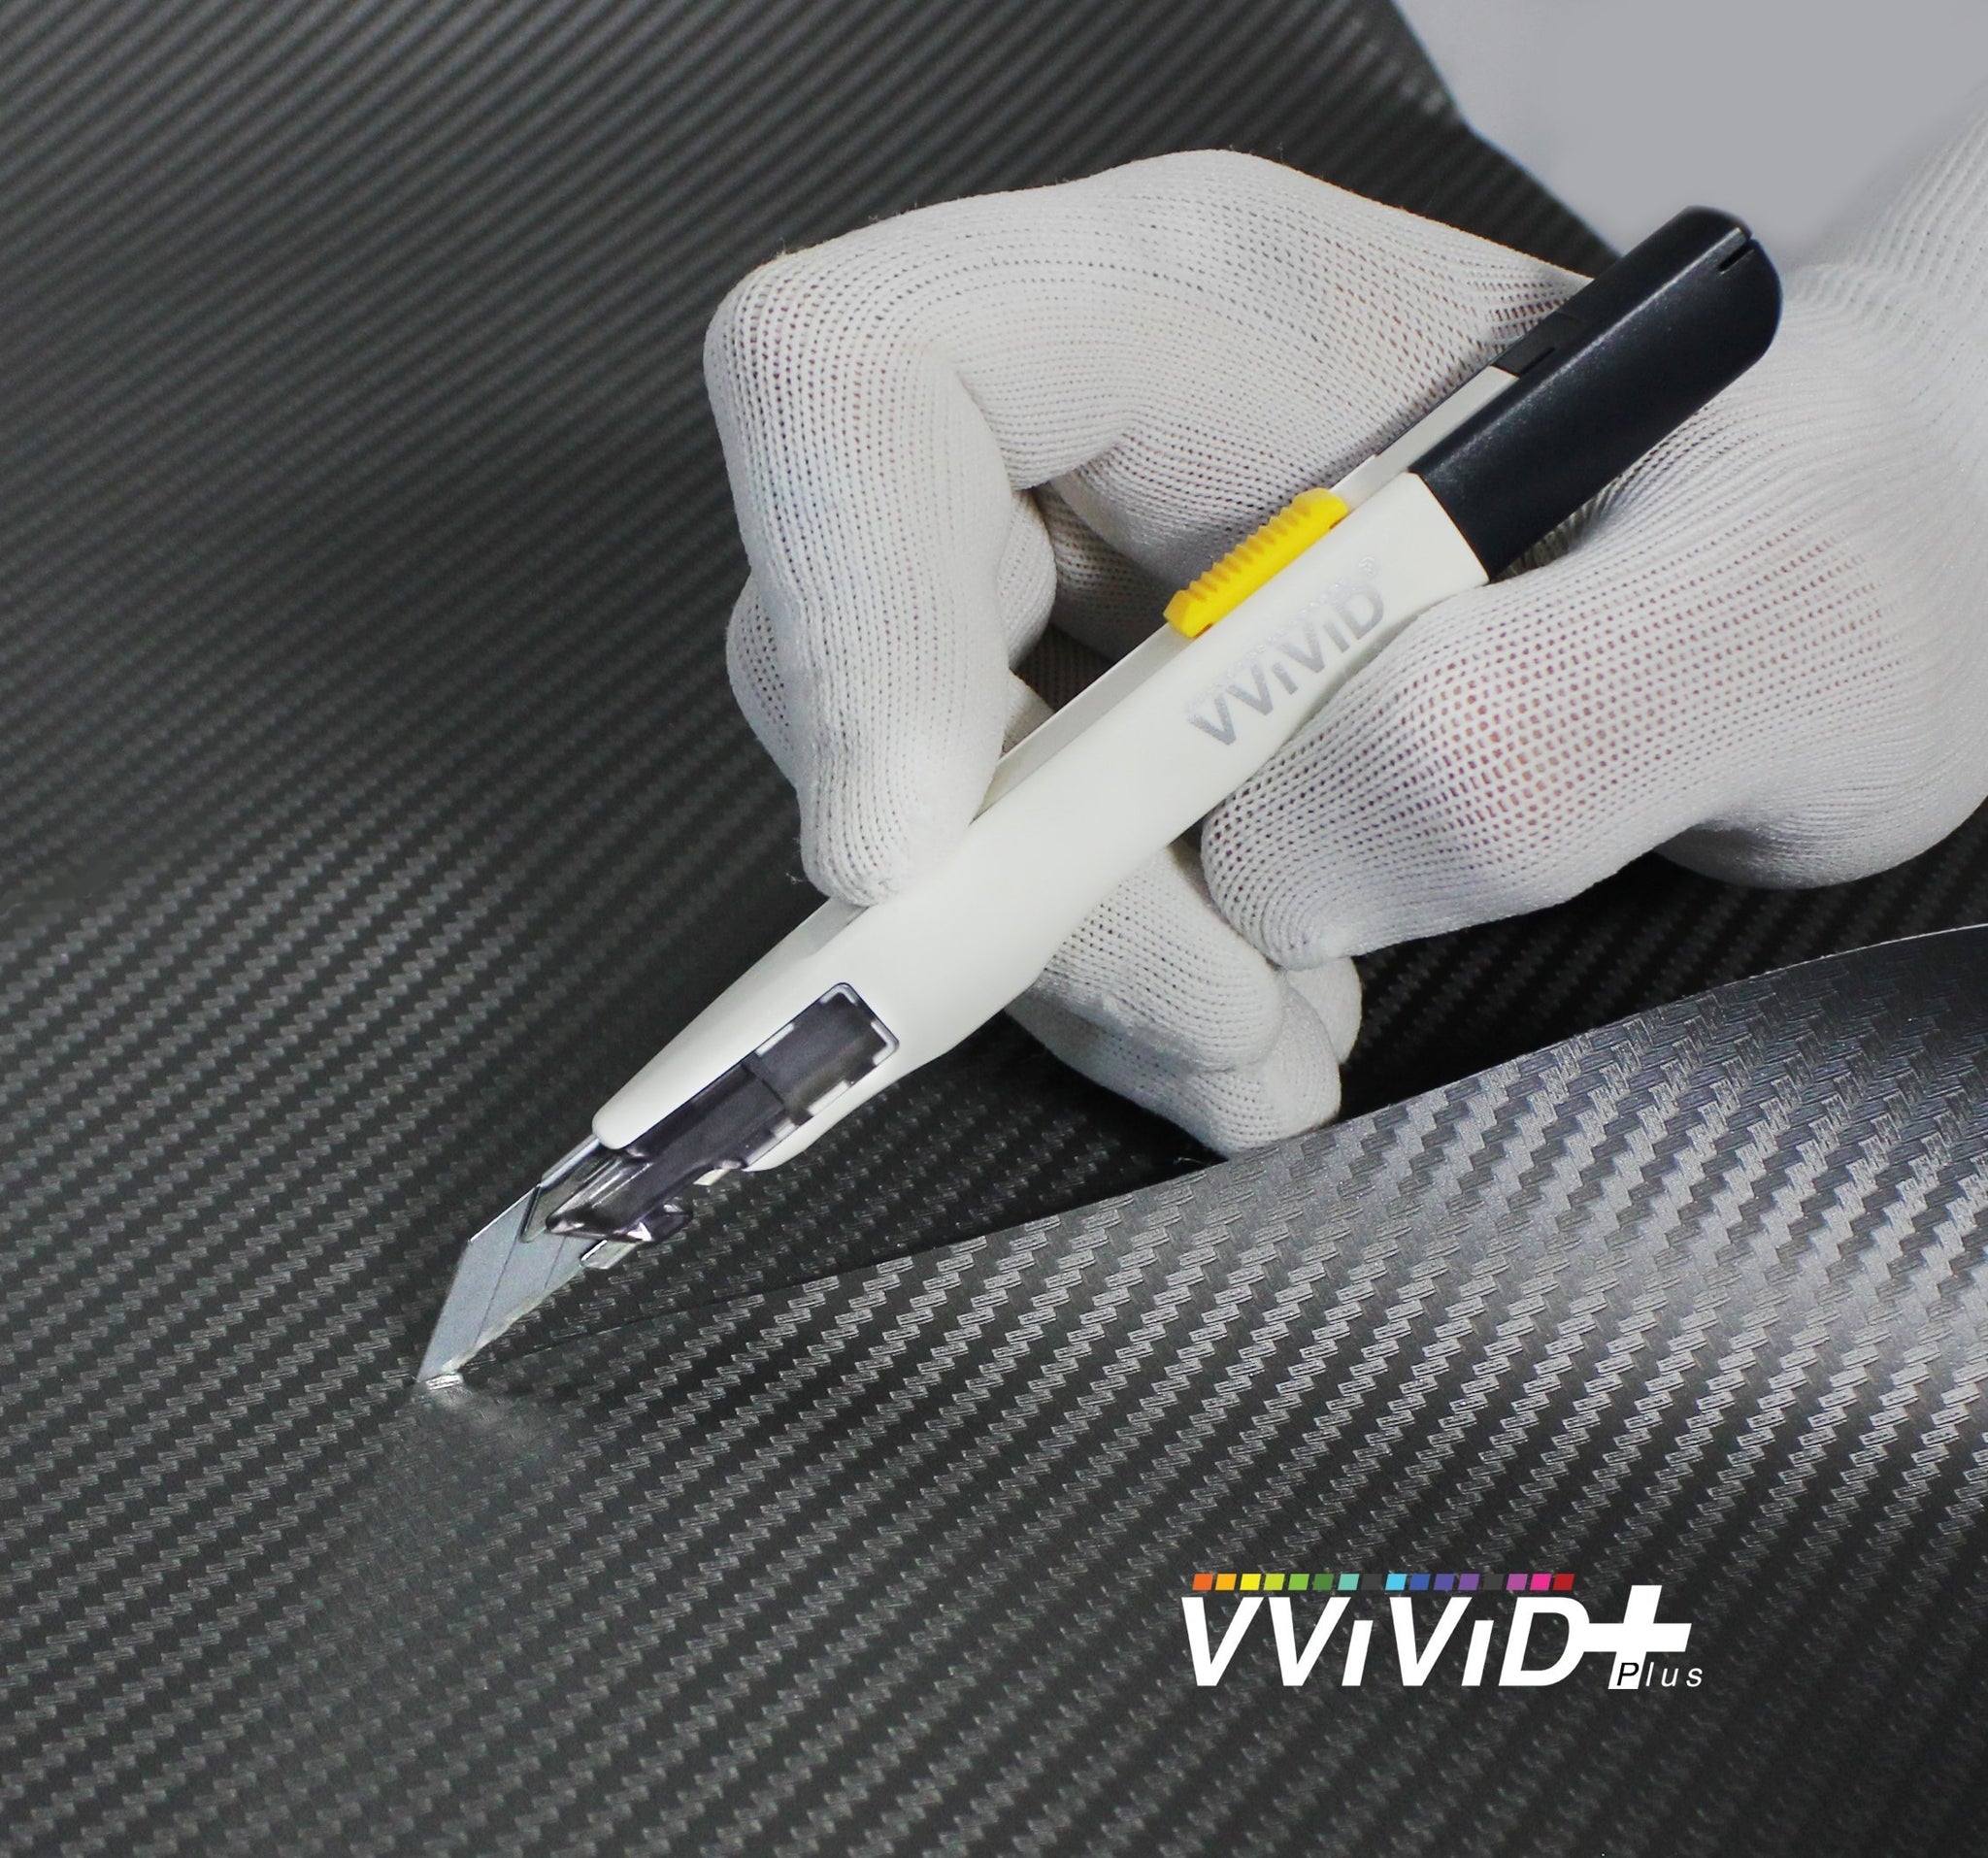 VViViD Vinyl Car Wrap Color Deck Sample Book and Precision Gliding Knife  with 5 Replacement Blades Bundle - M0